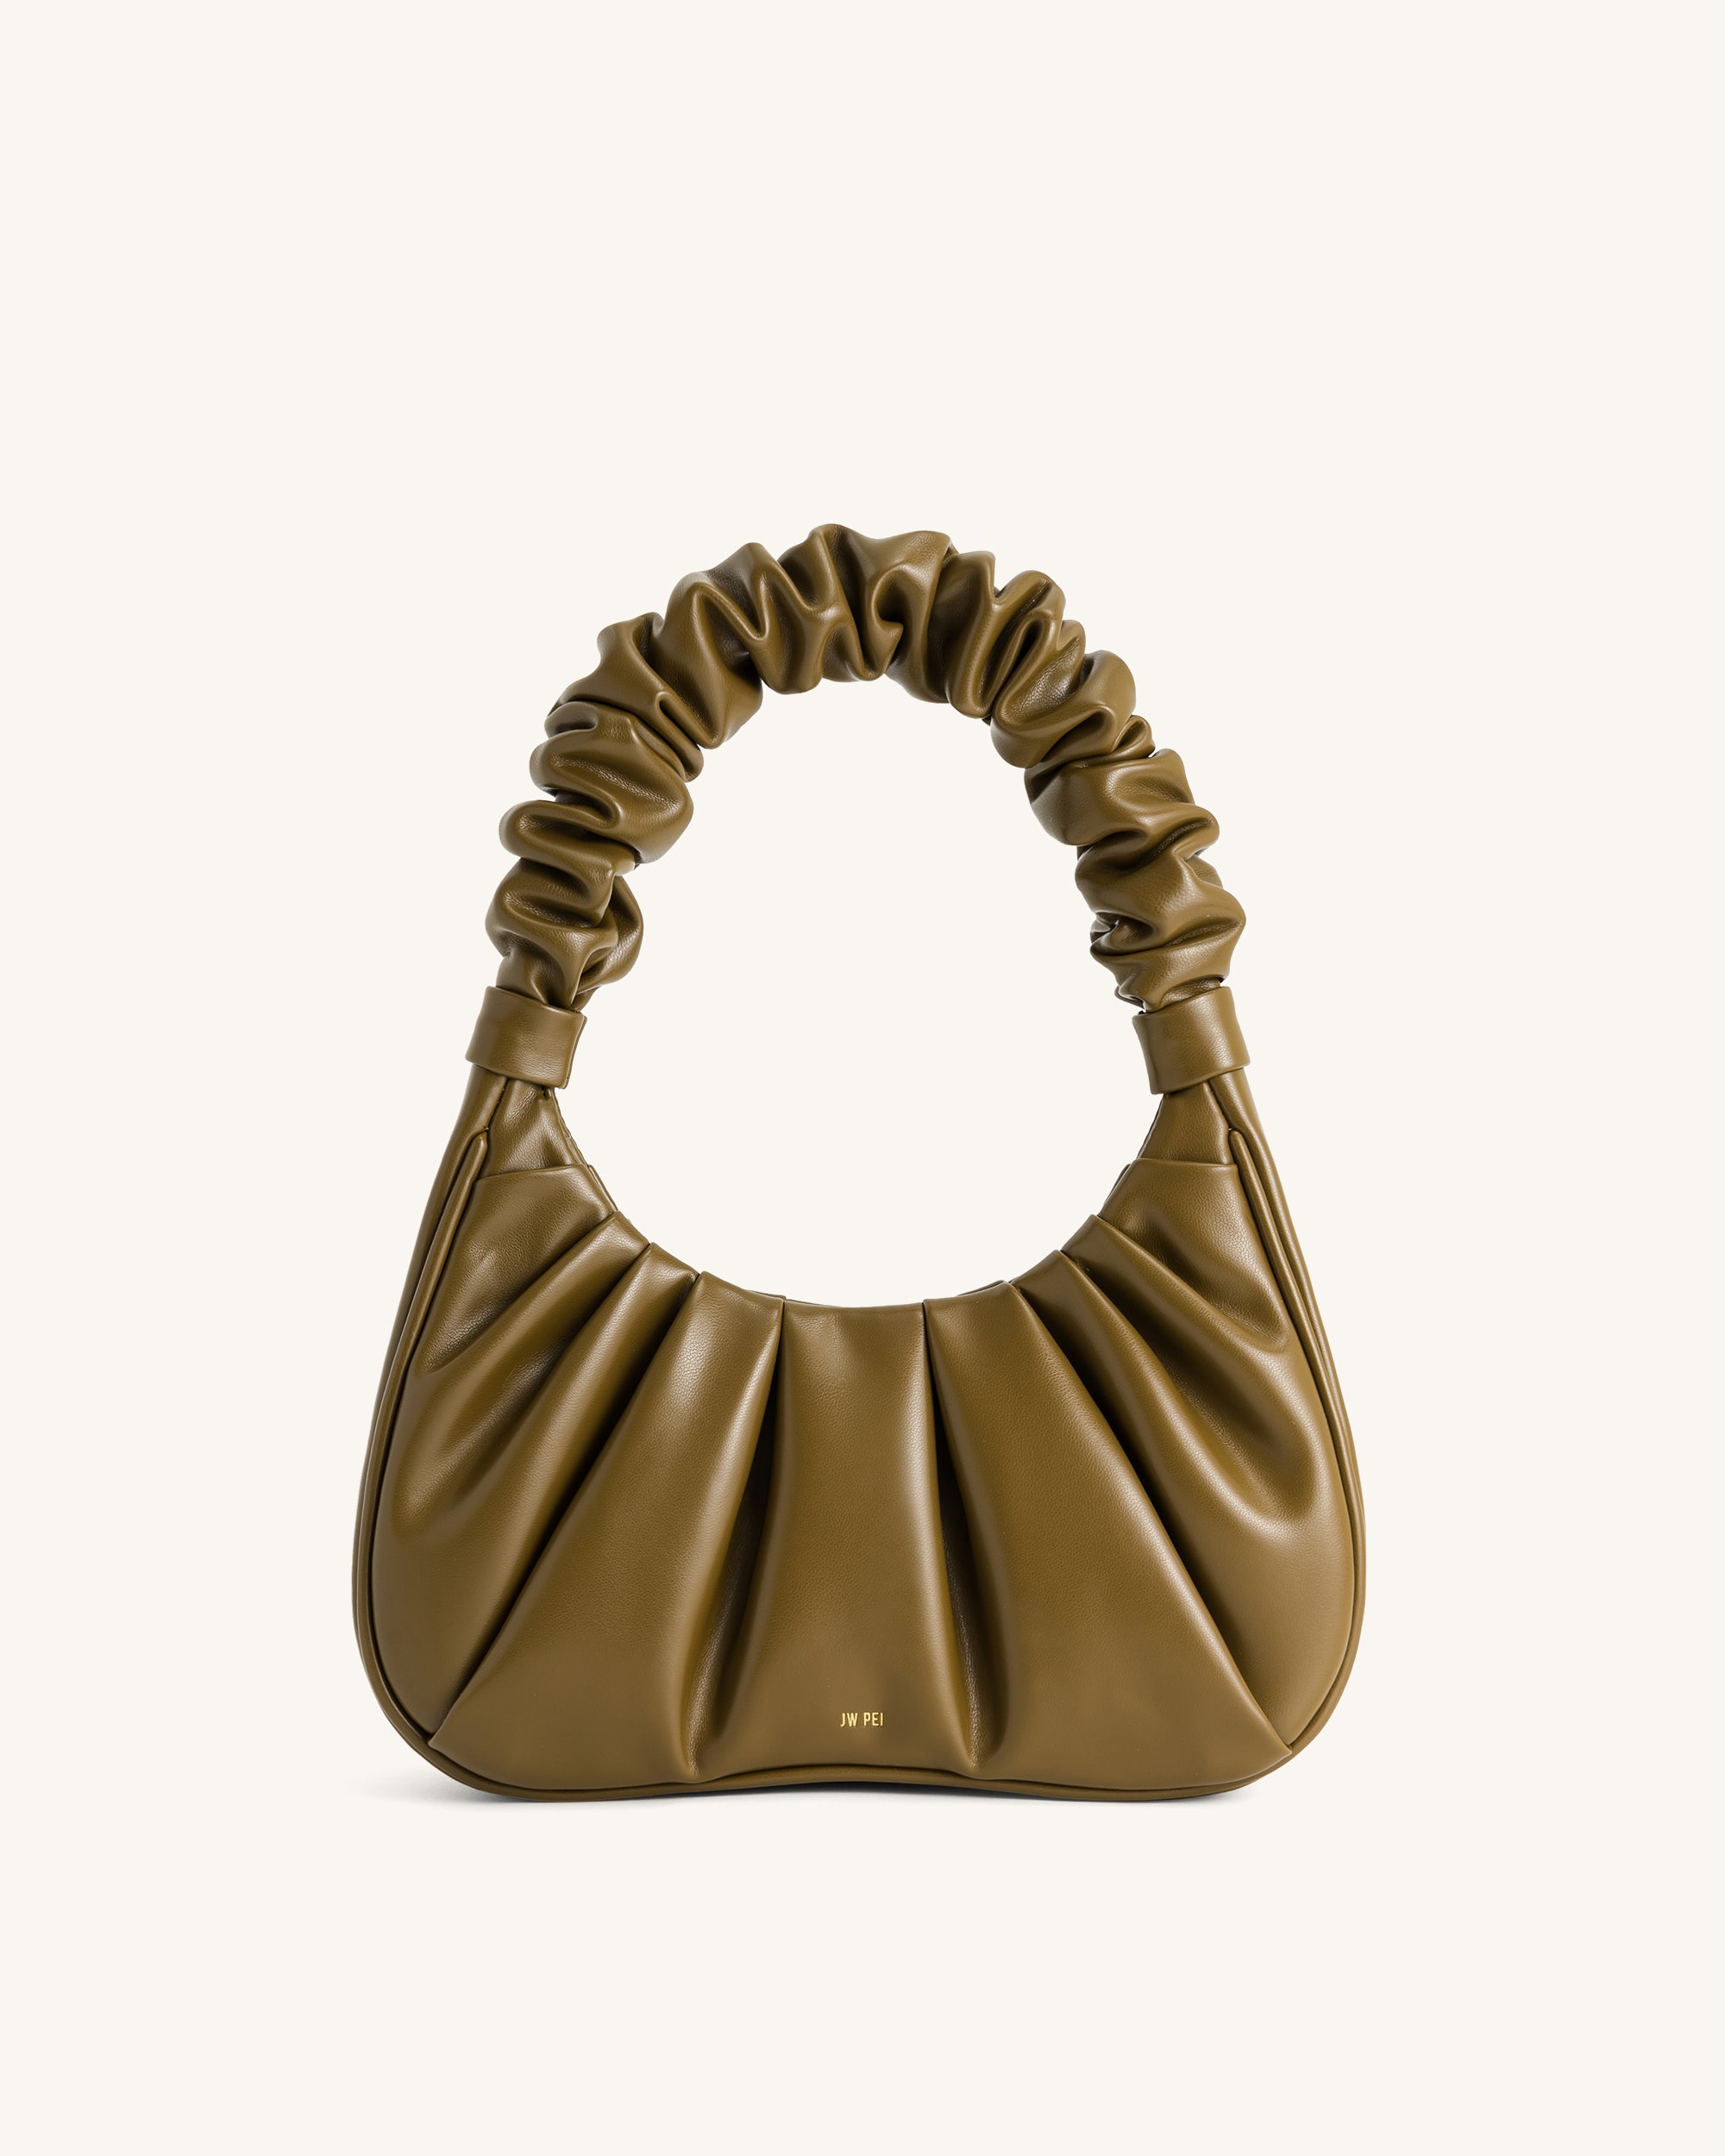 JW Pei Women's Gabbi Ruched Hobo Handbag